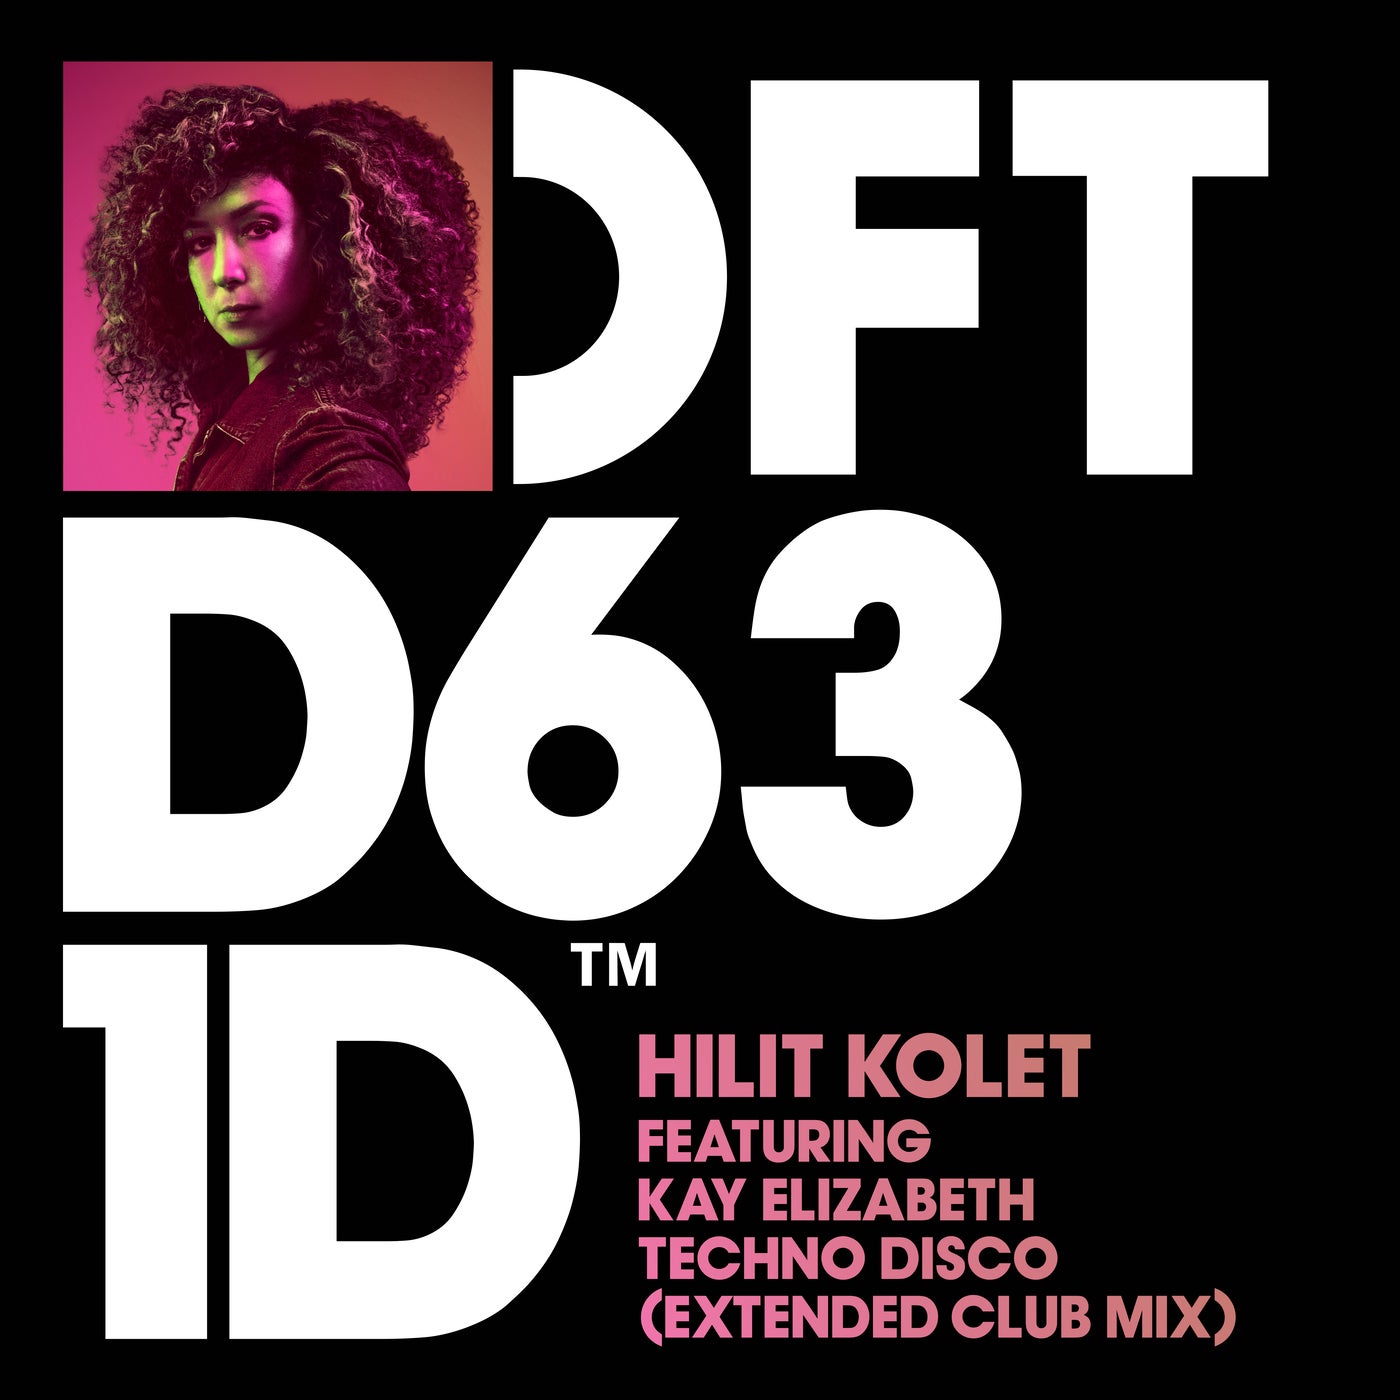 image cover: Hilit Kolet, Kay Elizabeth - Techno Disco - Extended Club Mix / DFTD631D4